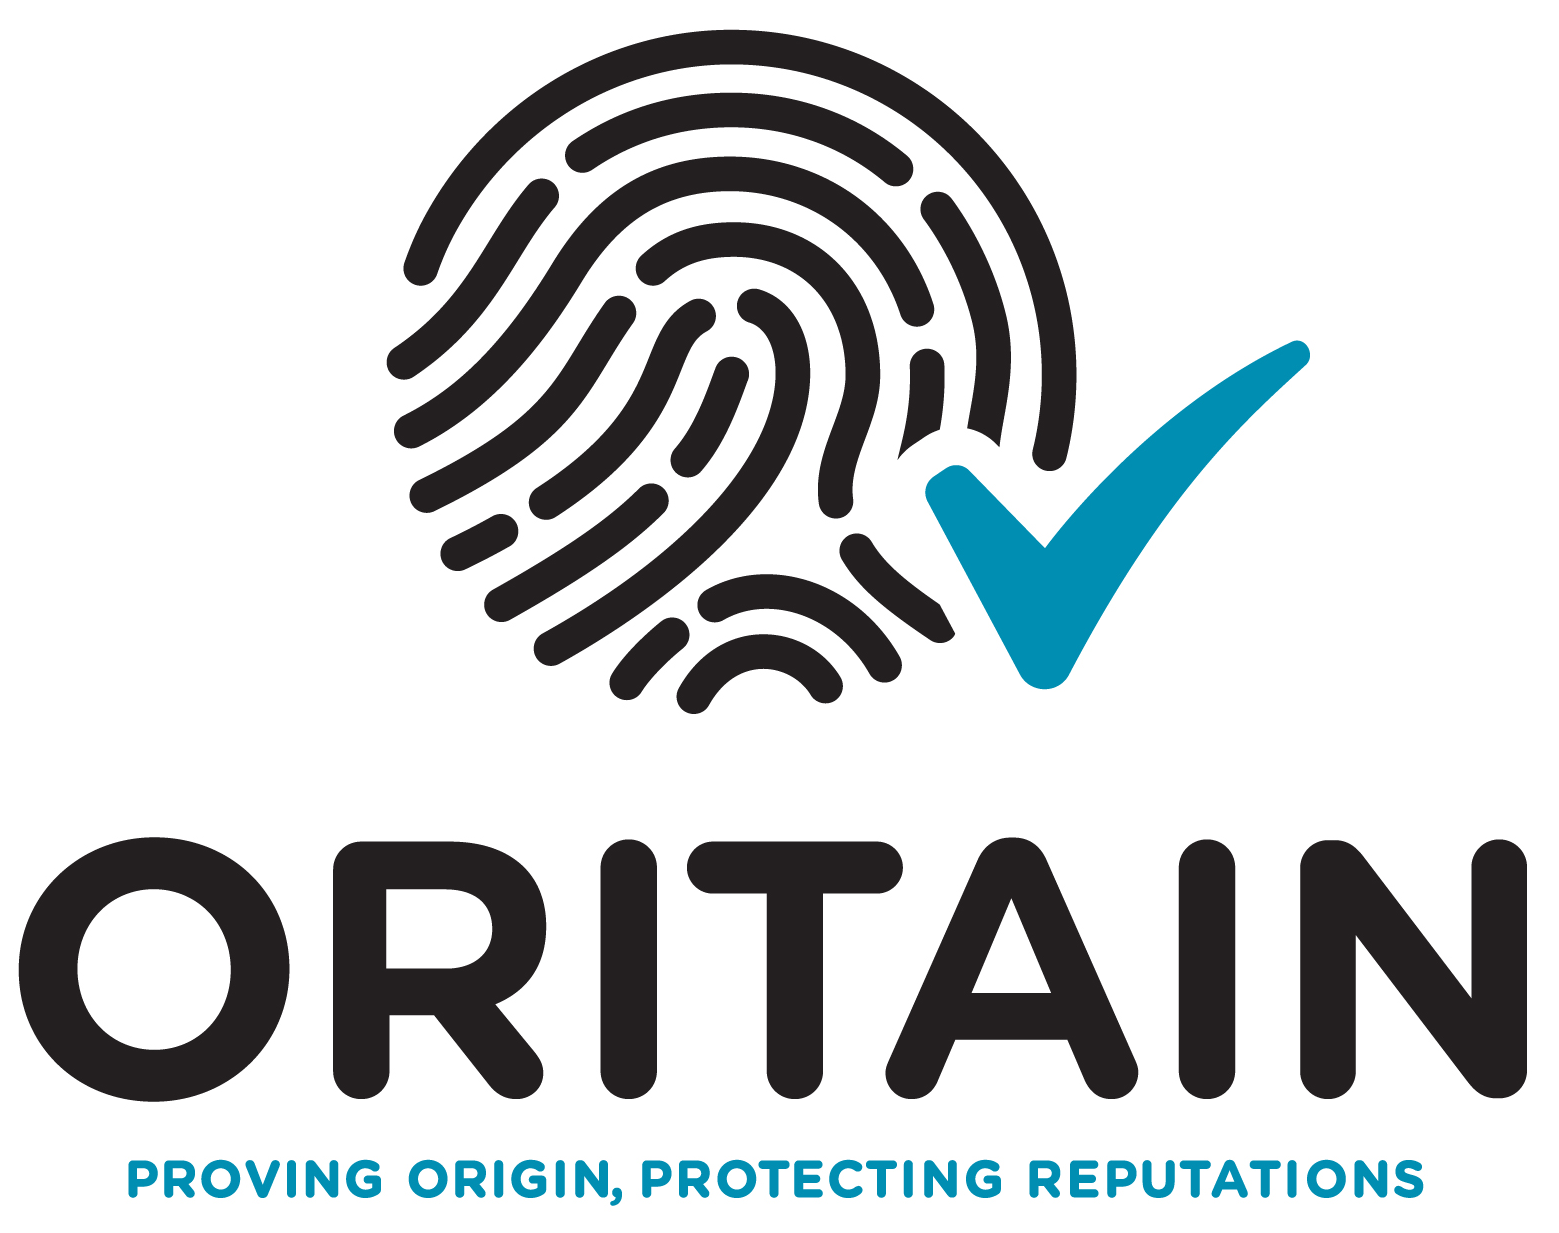 Oritain logo